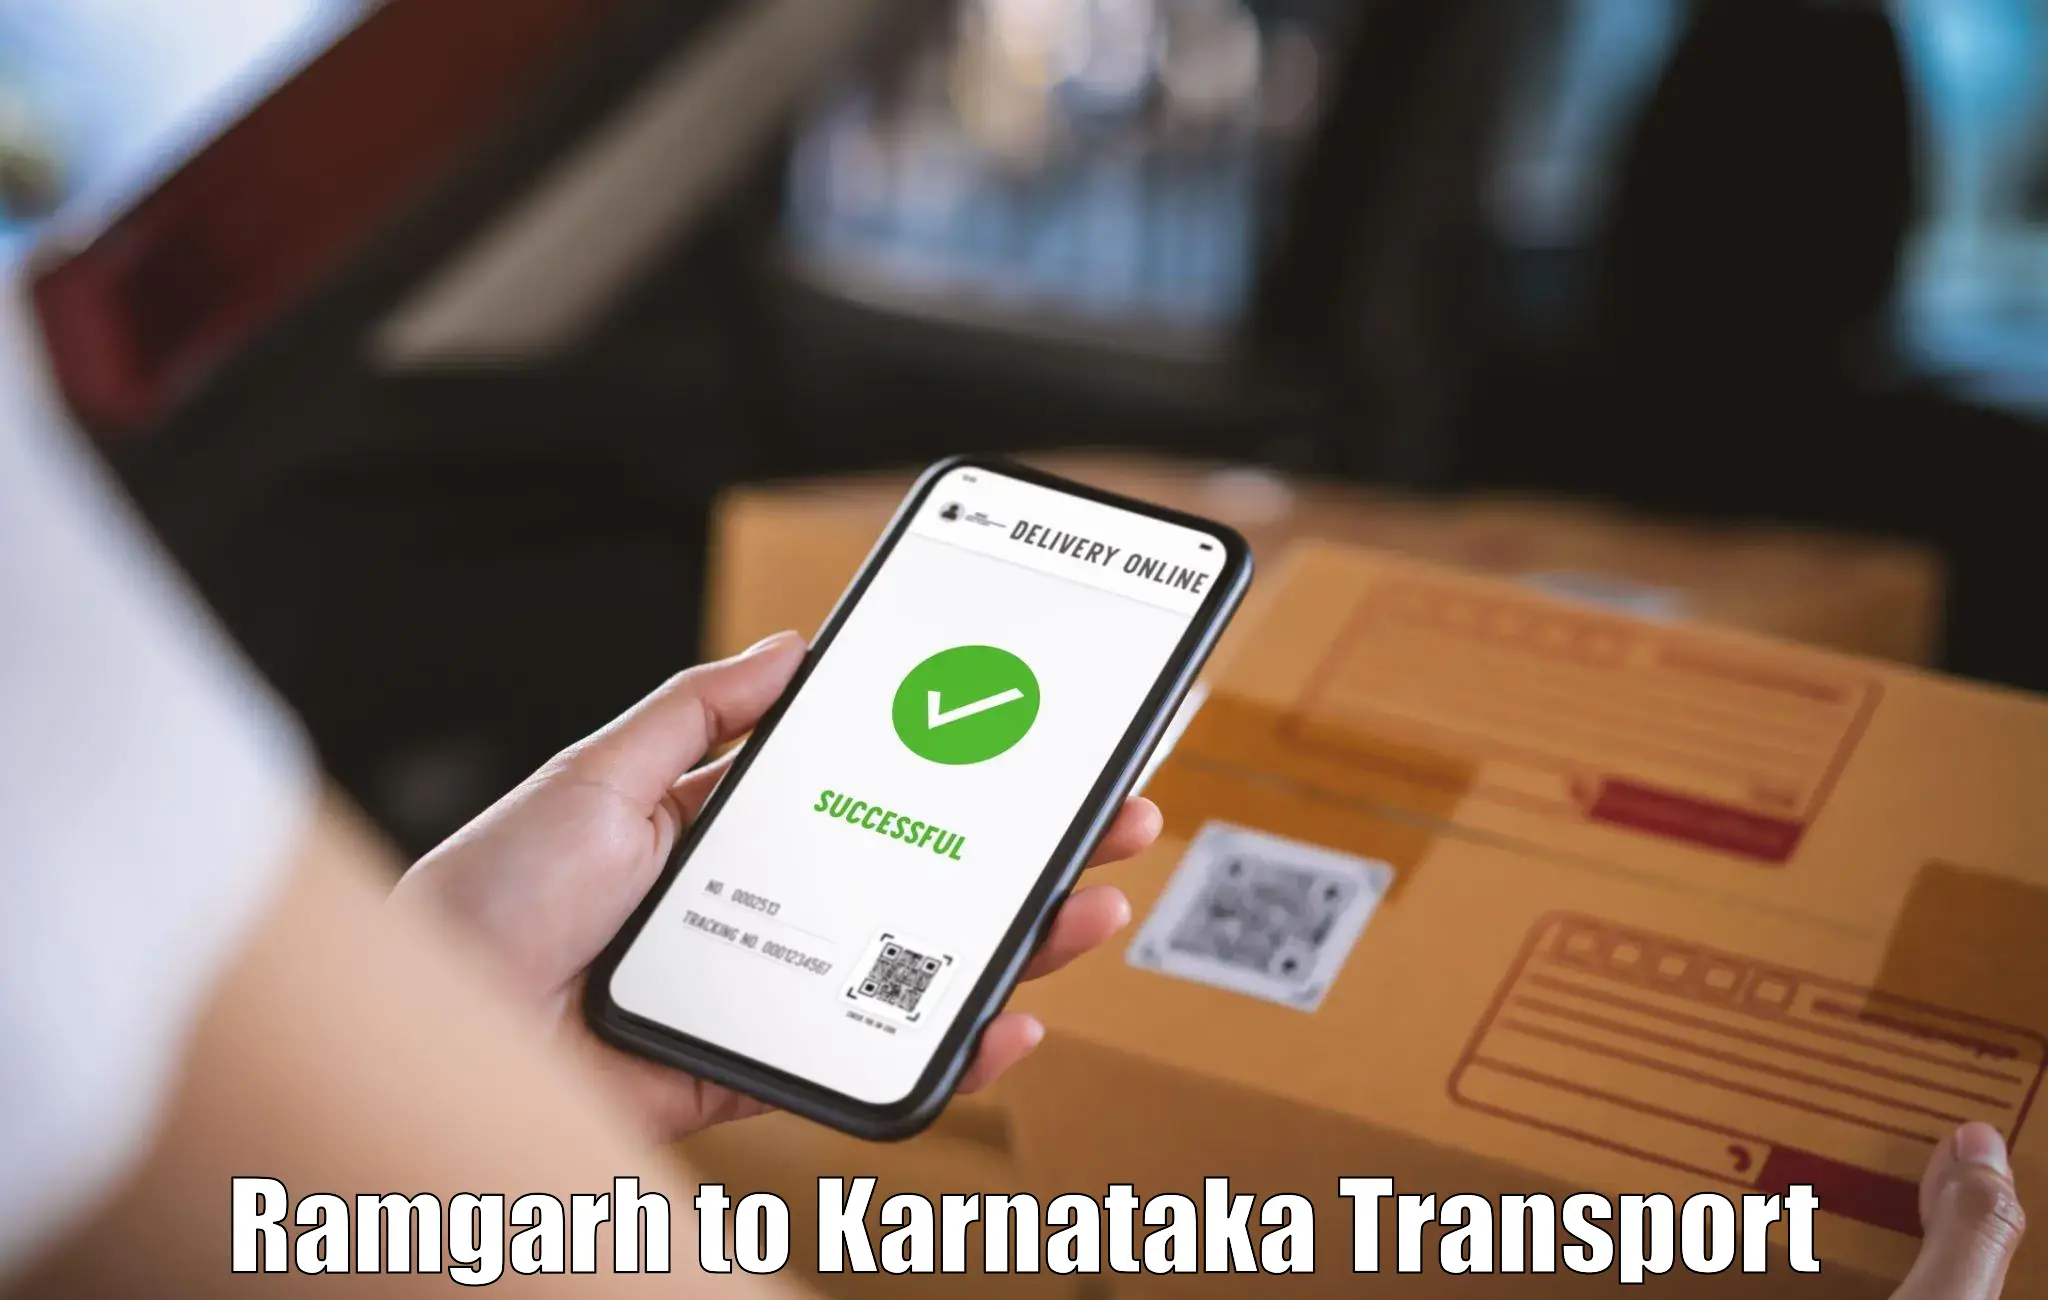 Nearest transport service Ramgarh to Karnataka